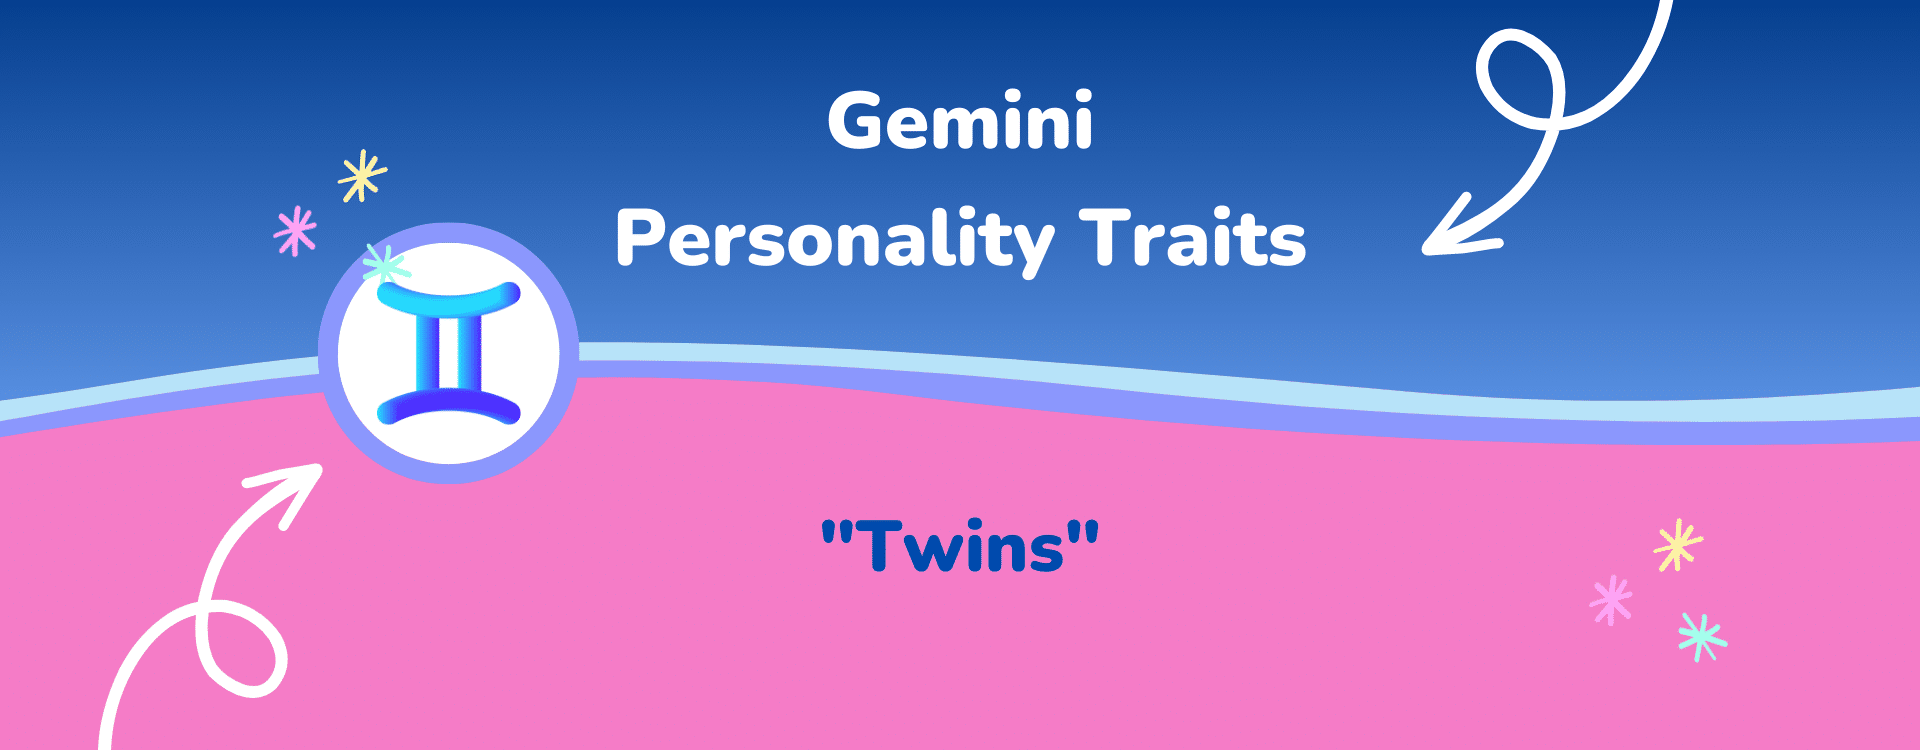 gemini personality traits